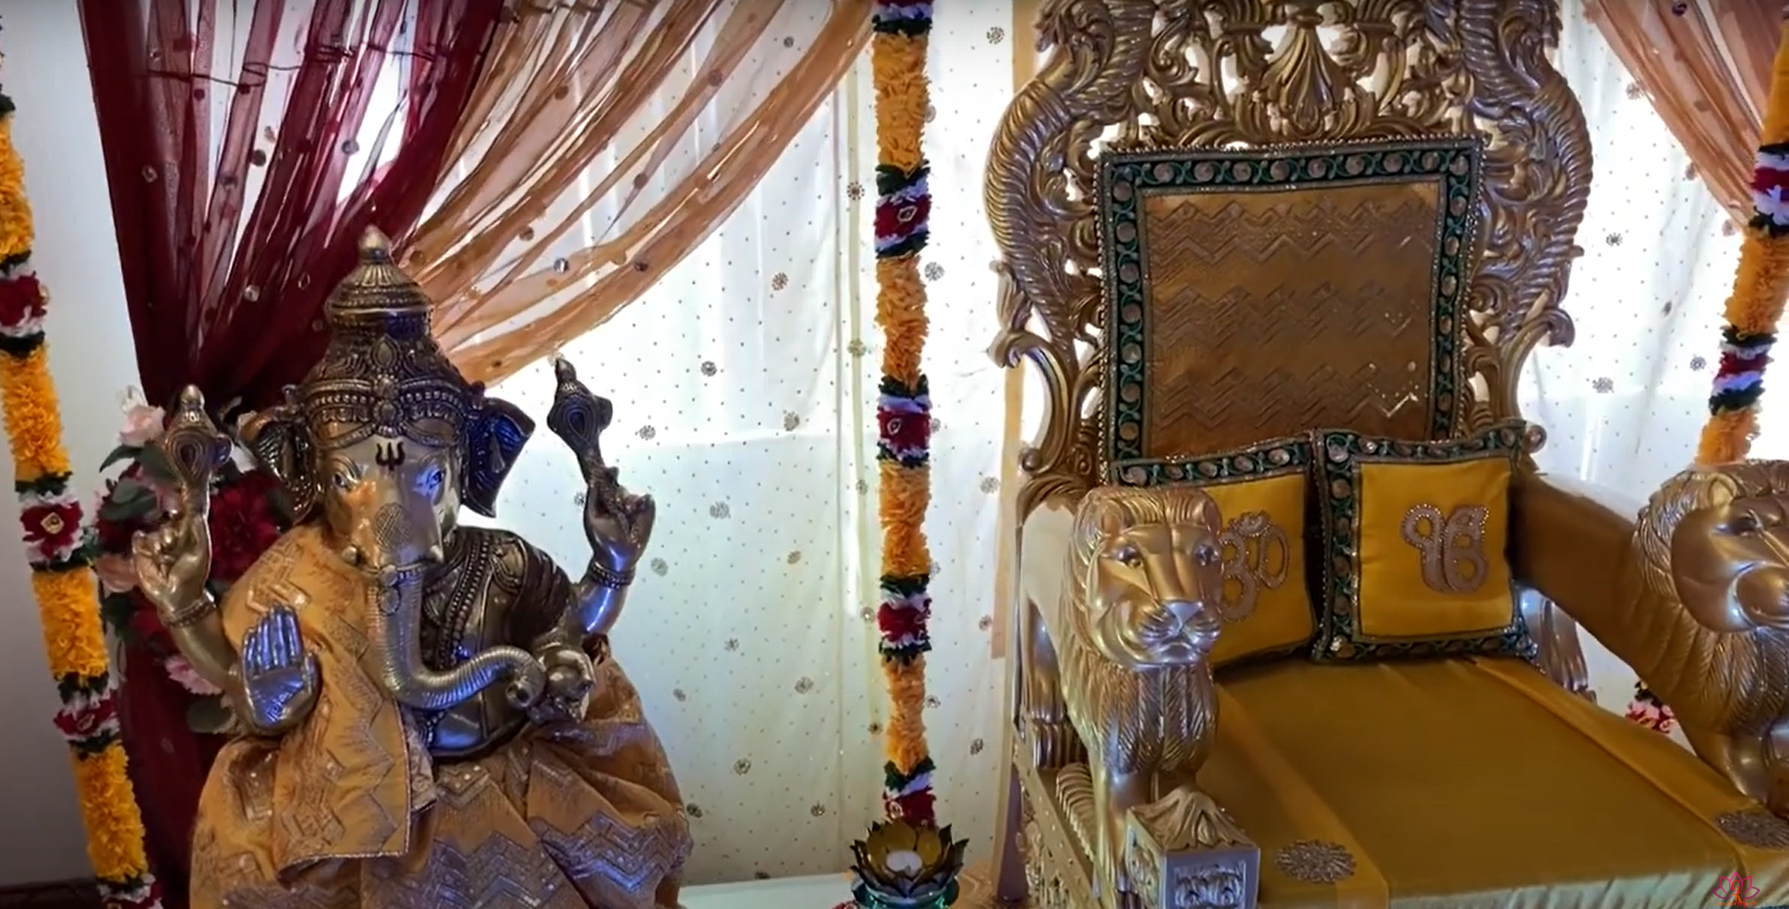 Guruji's ashram in Edison